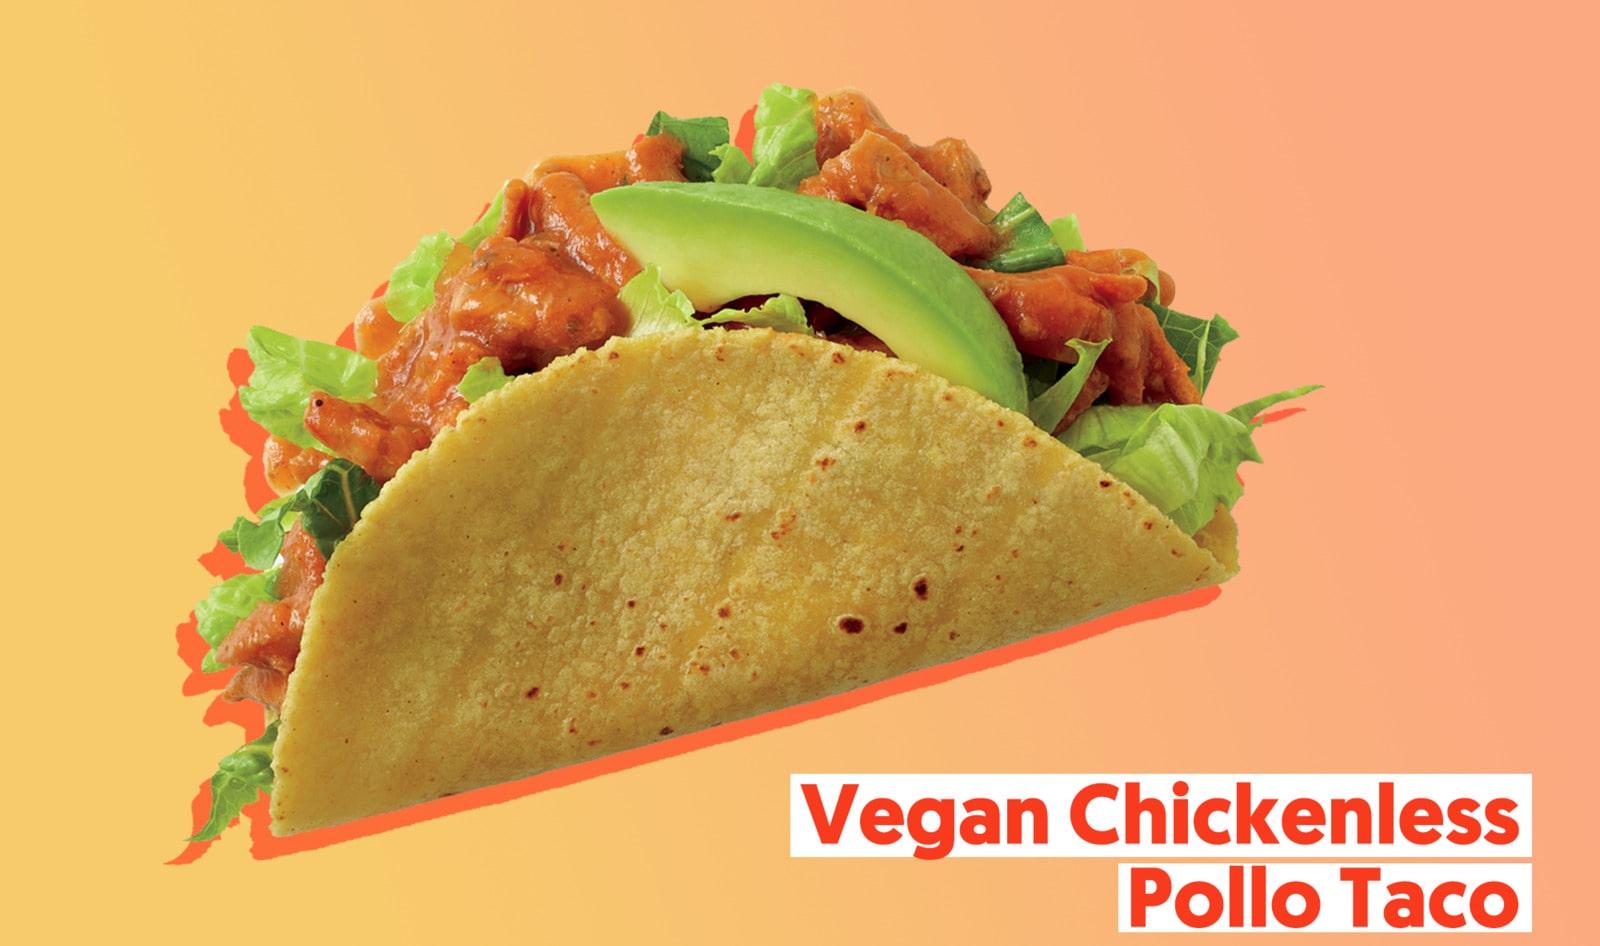 El Pollo Loco's Meatless Chicken Is Now Vegan and ...